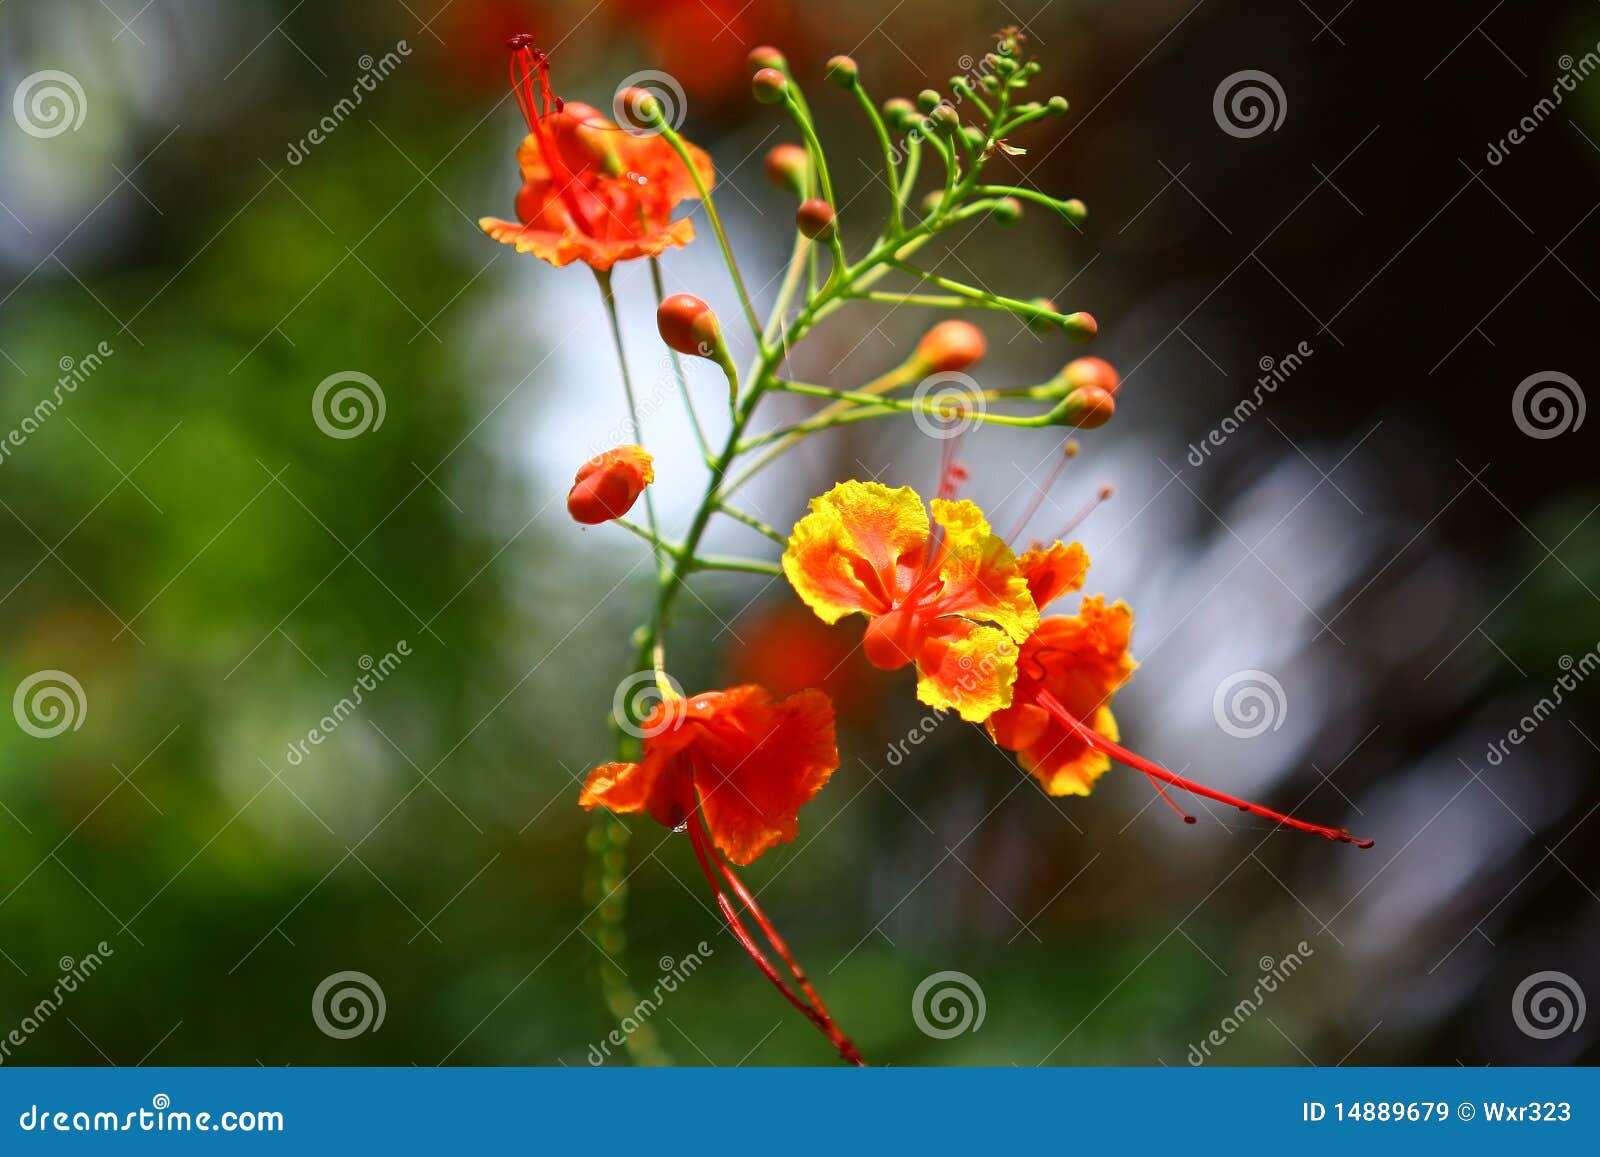 Beautiful Flowers in the Sunshine Stock Image - Image of maldives ...